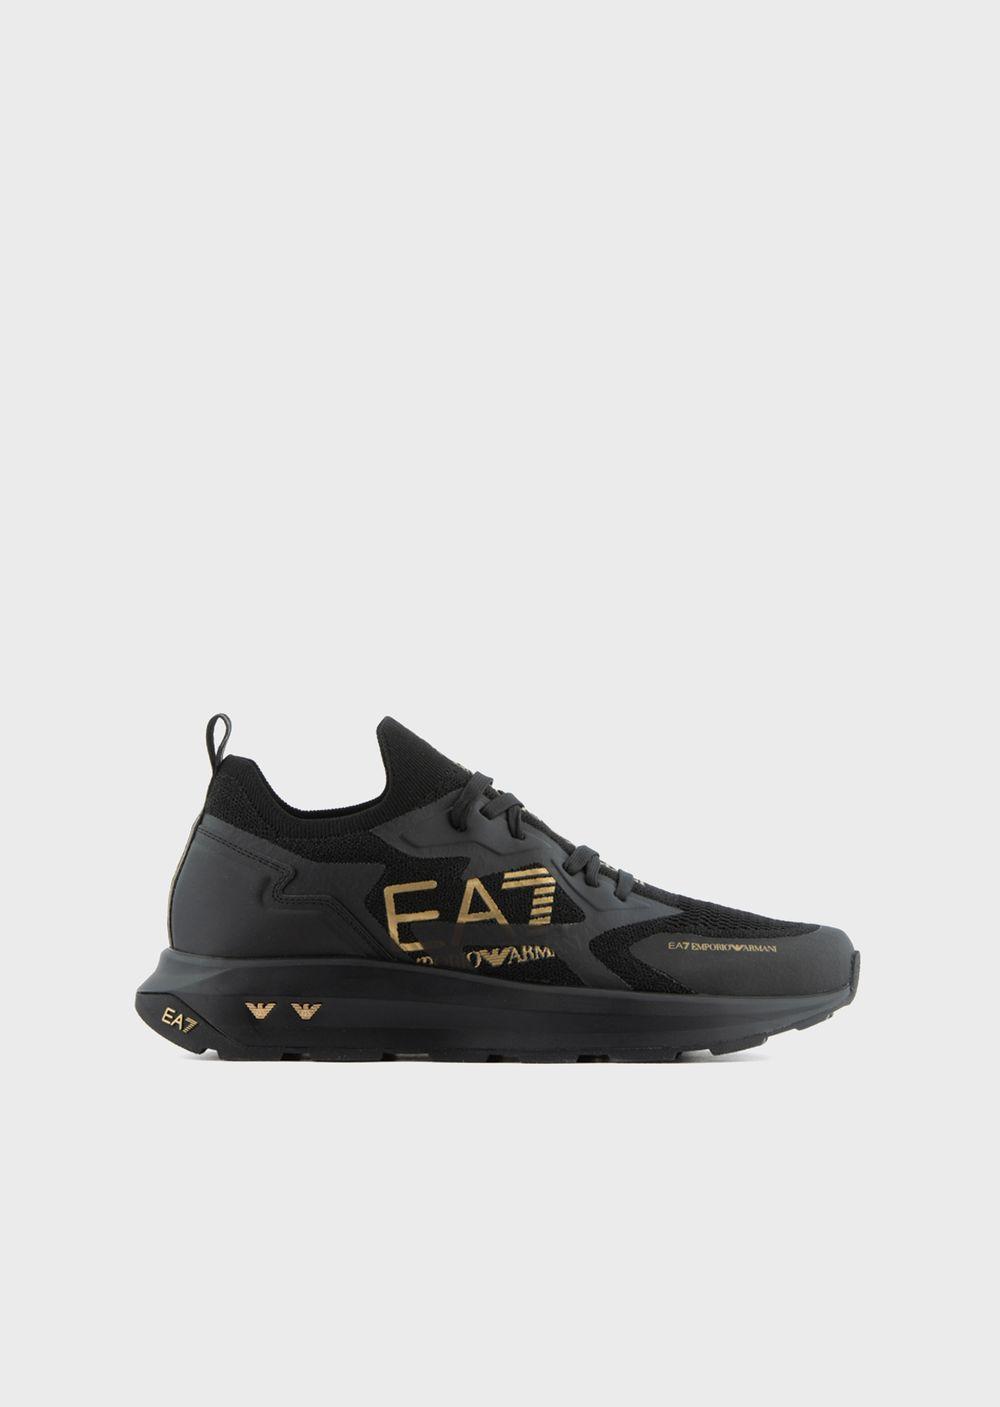 EA7 Black & White Altura Knit Sneakers | Lyst